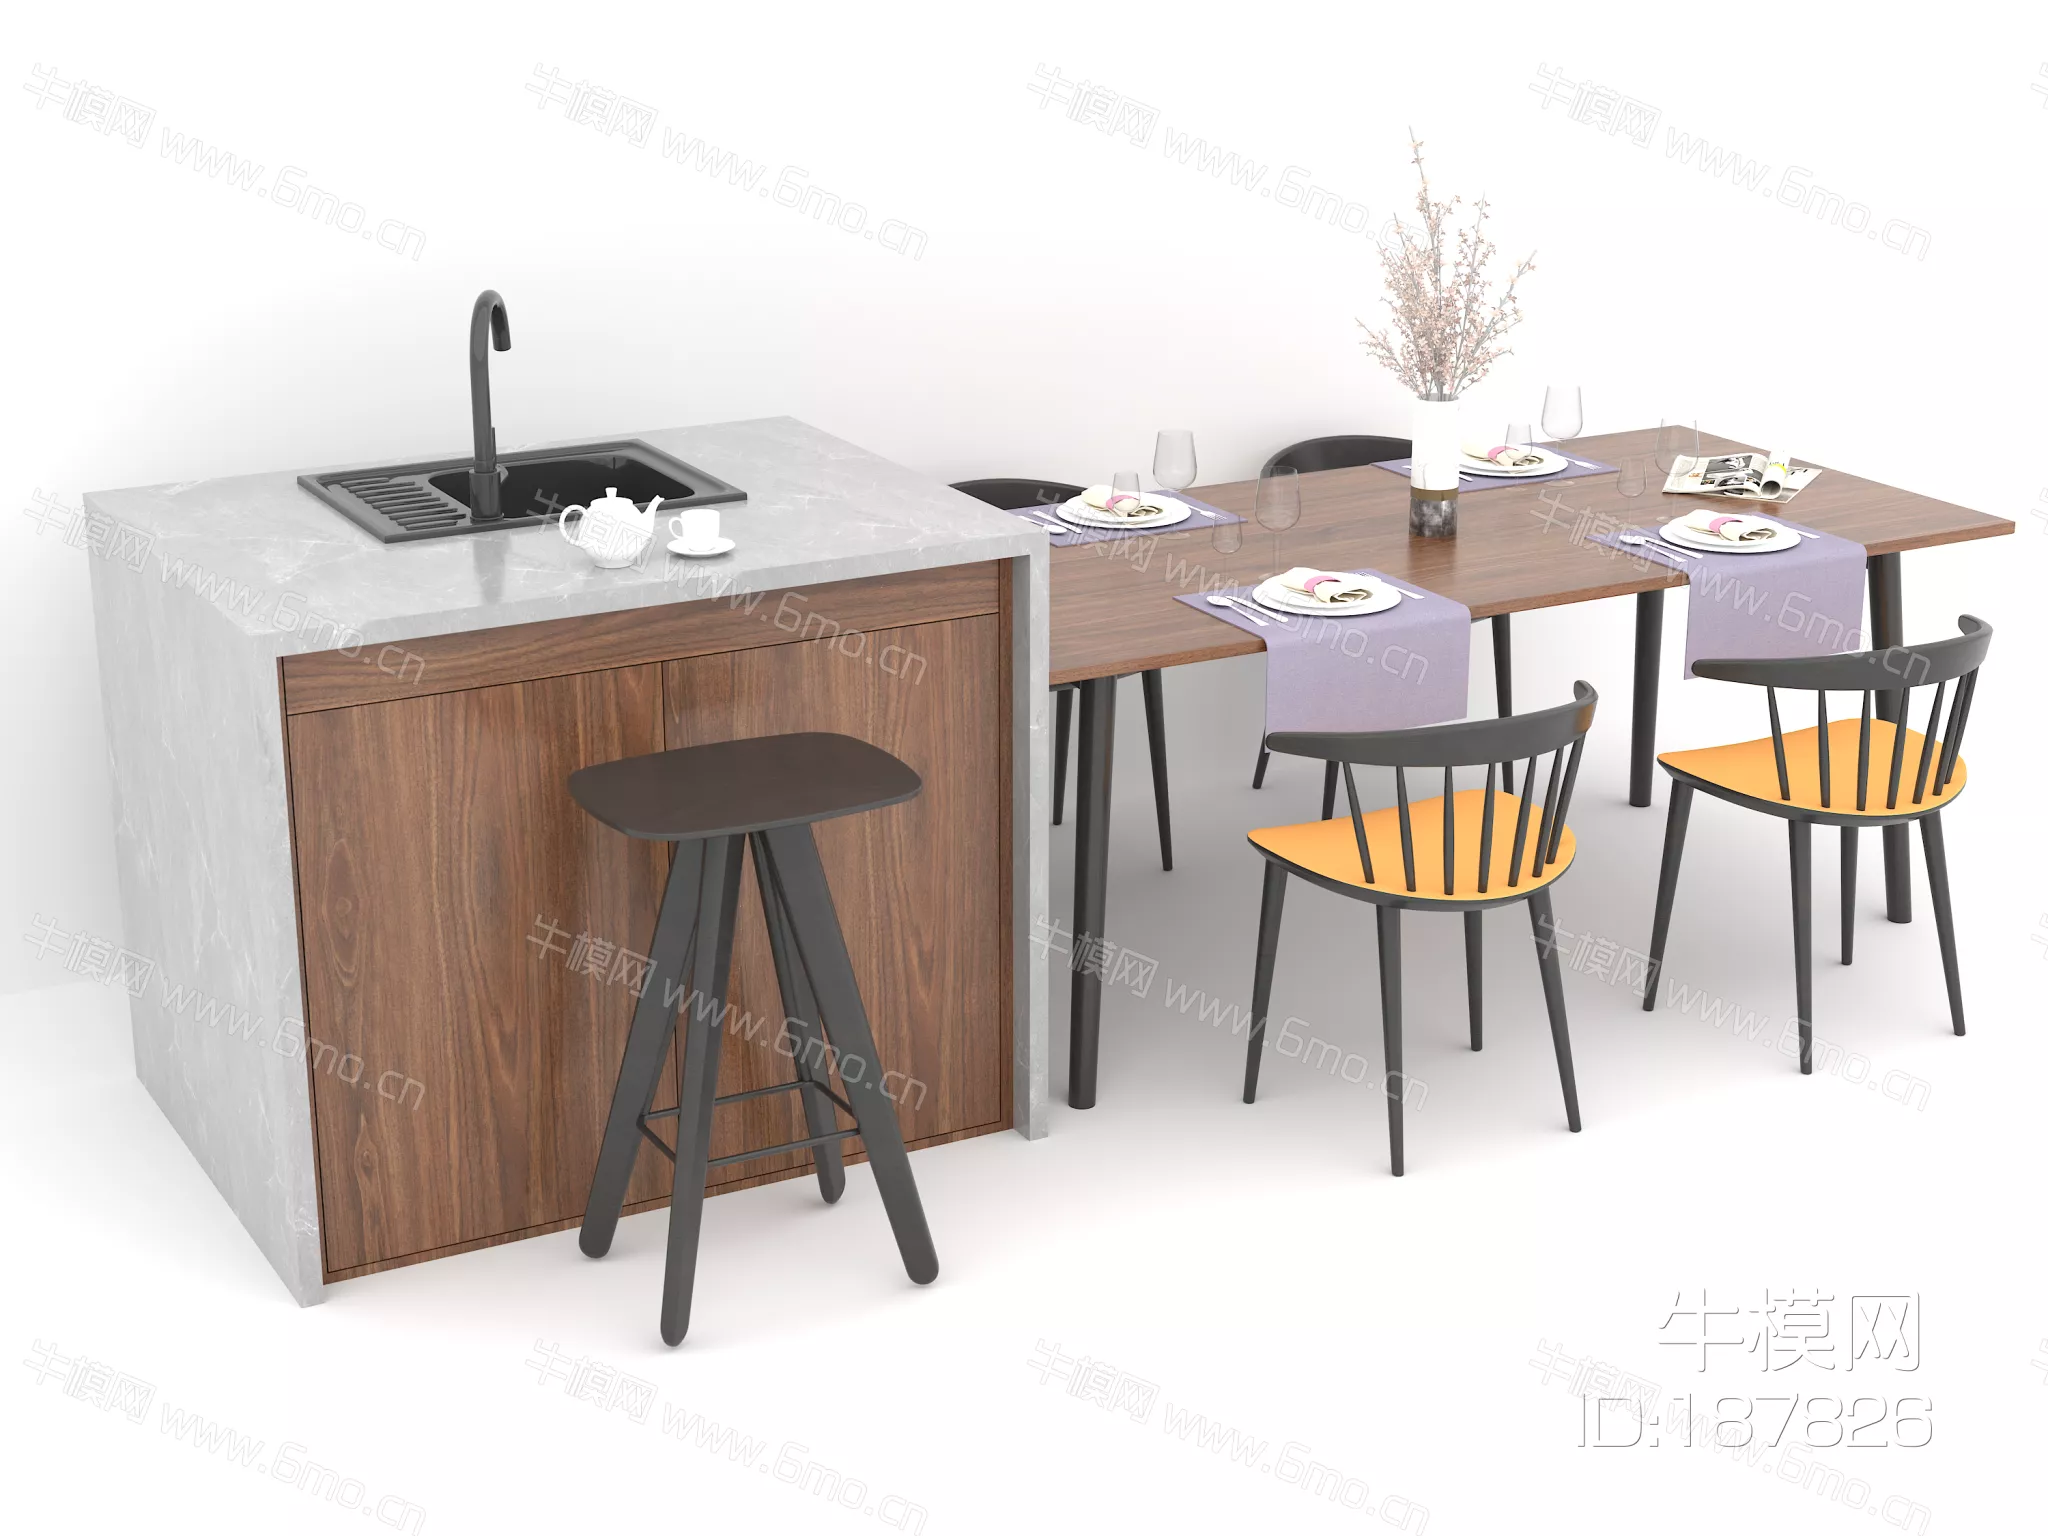 MODERN DINING TABLE SET - SKETCHUP 3D MODEL - VRAY - 187826